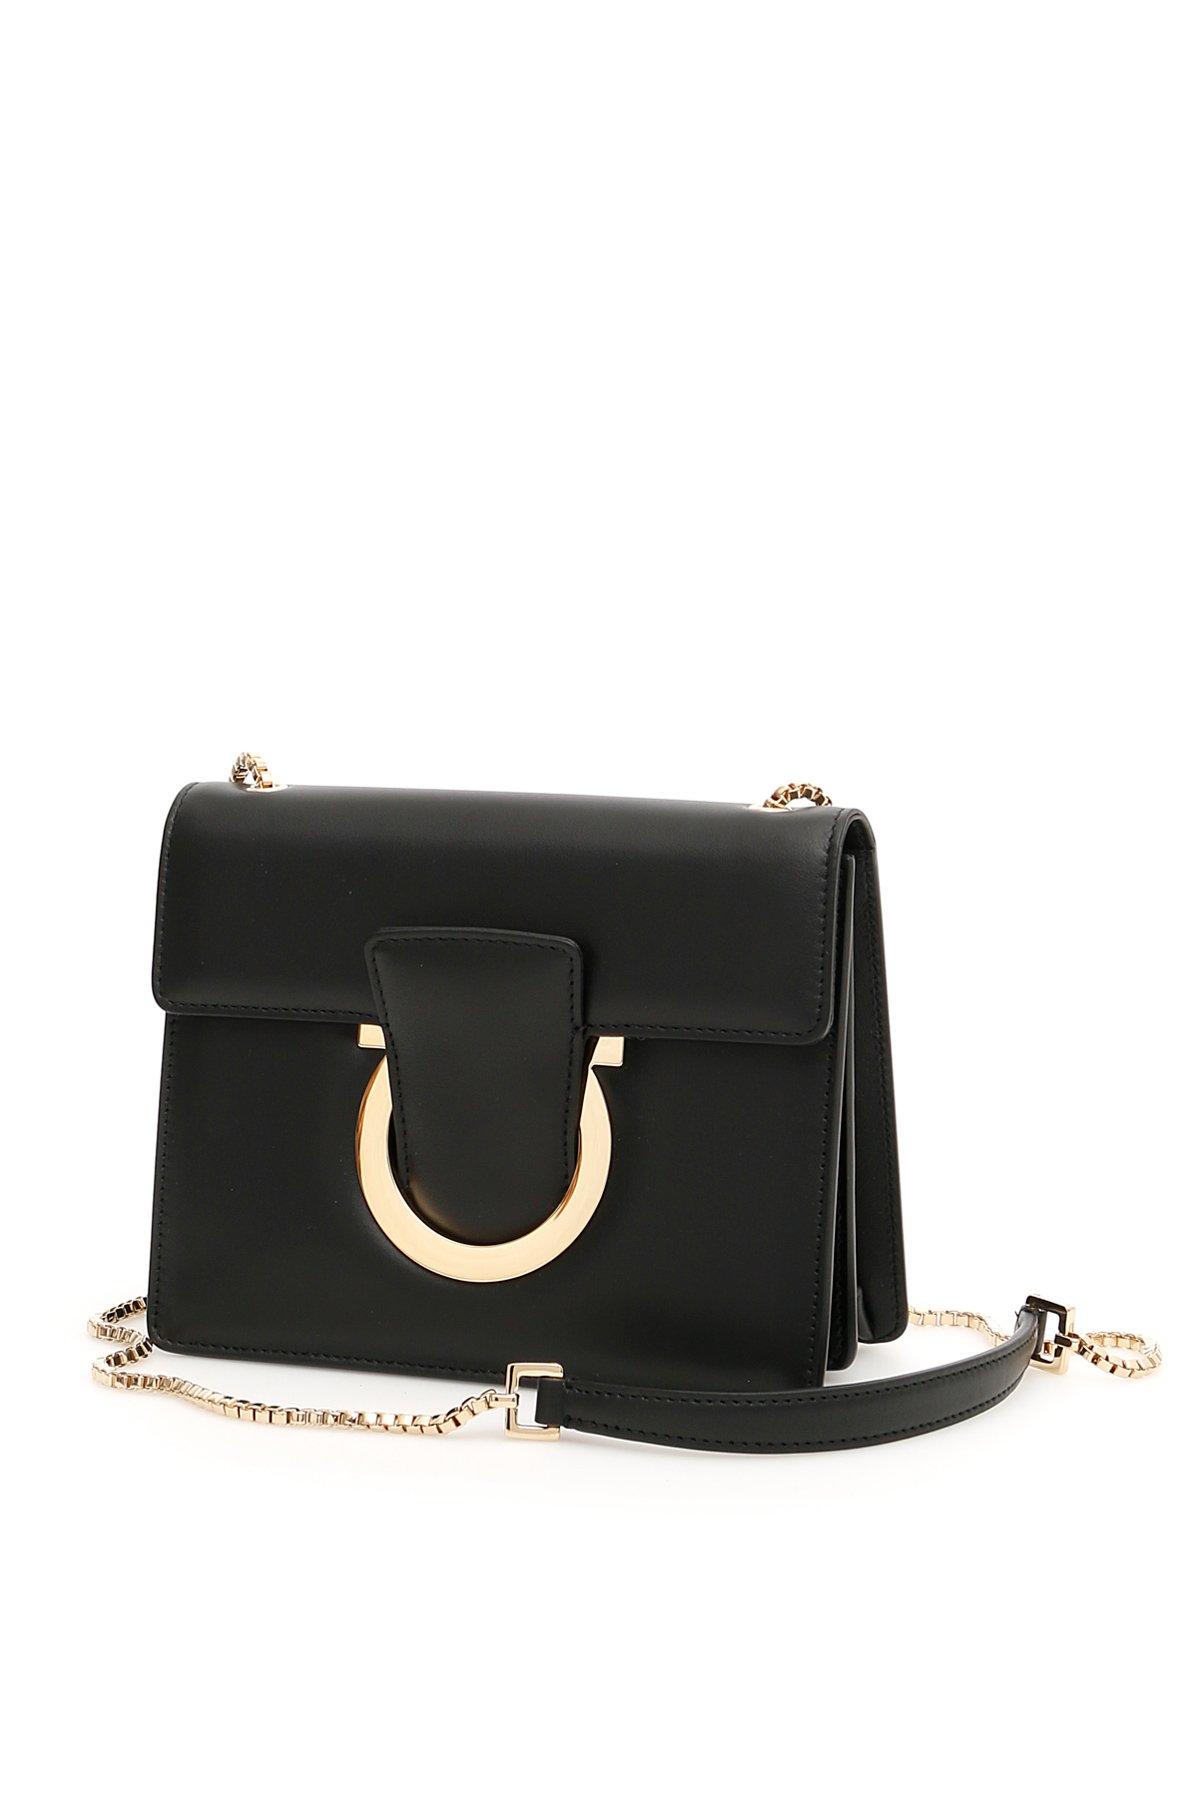 Ferragamo Leather Thalia Crossbody Bag in Nero (Black) | Lyst